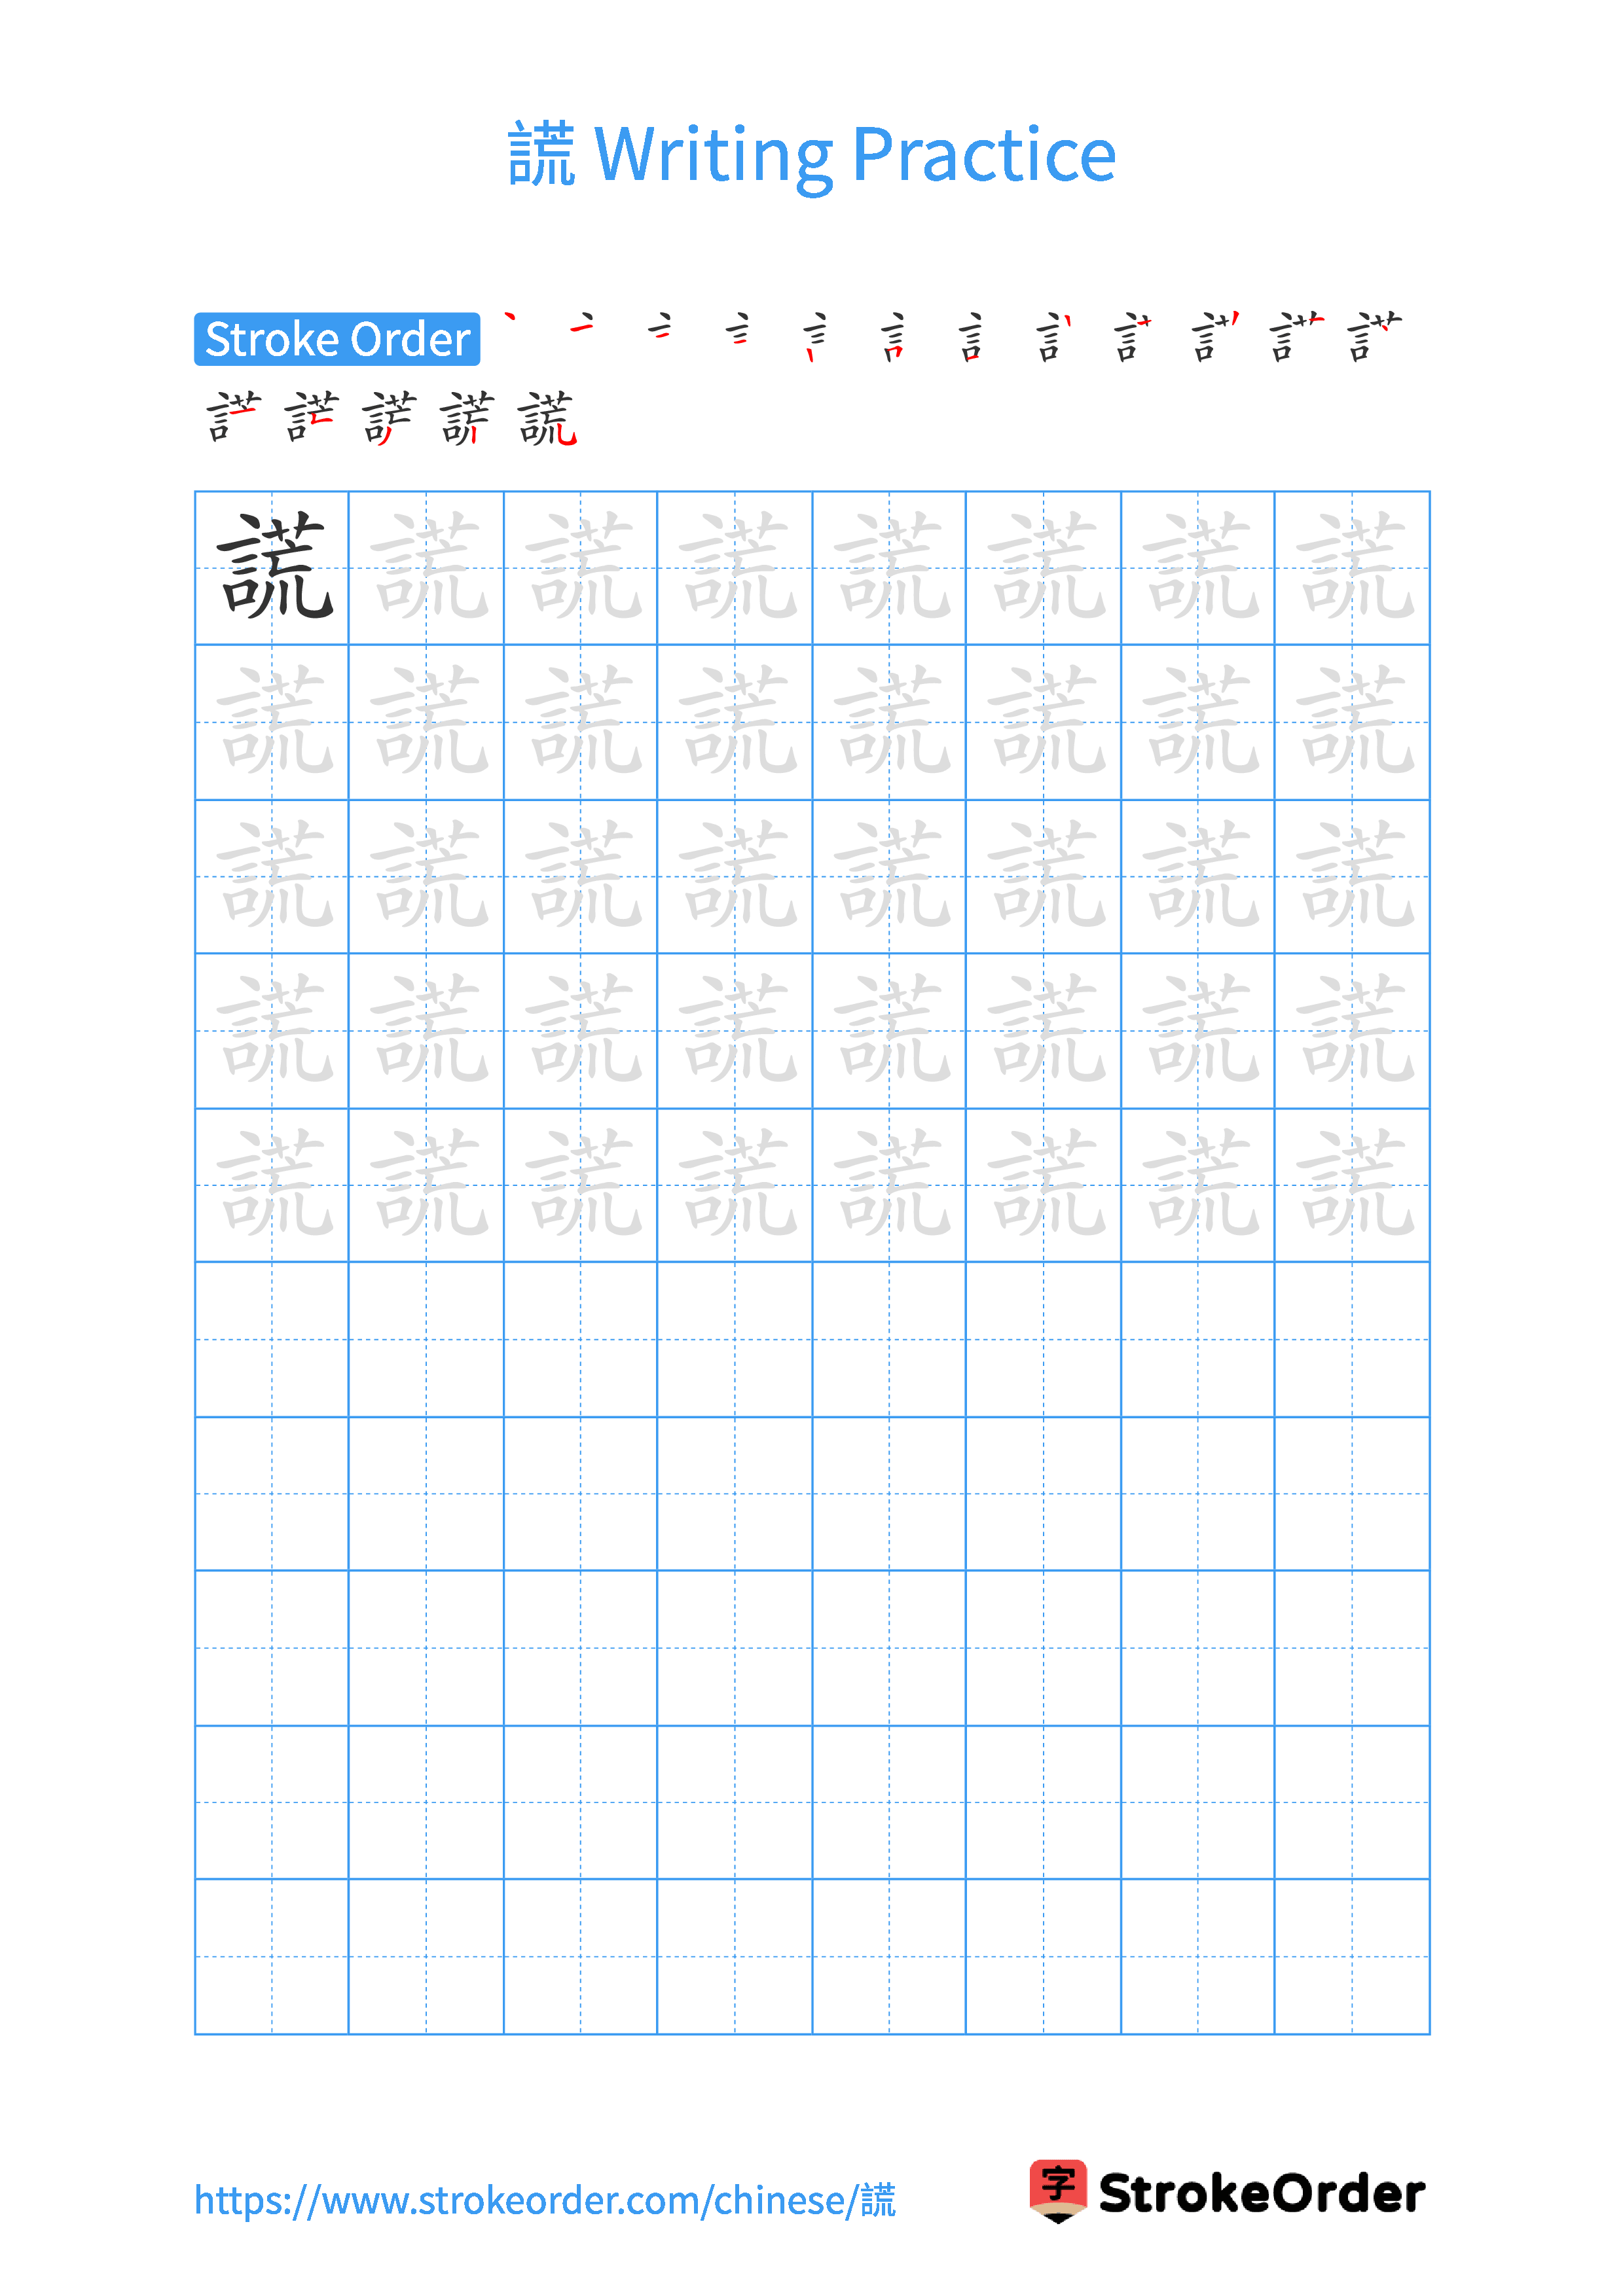 Printable Handwriting Practice Worksheet of the Chinese character 謊 in Portrait Orientation (Tian Zi Ge)